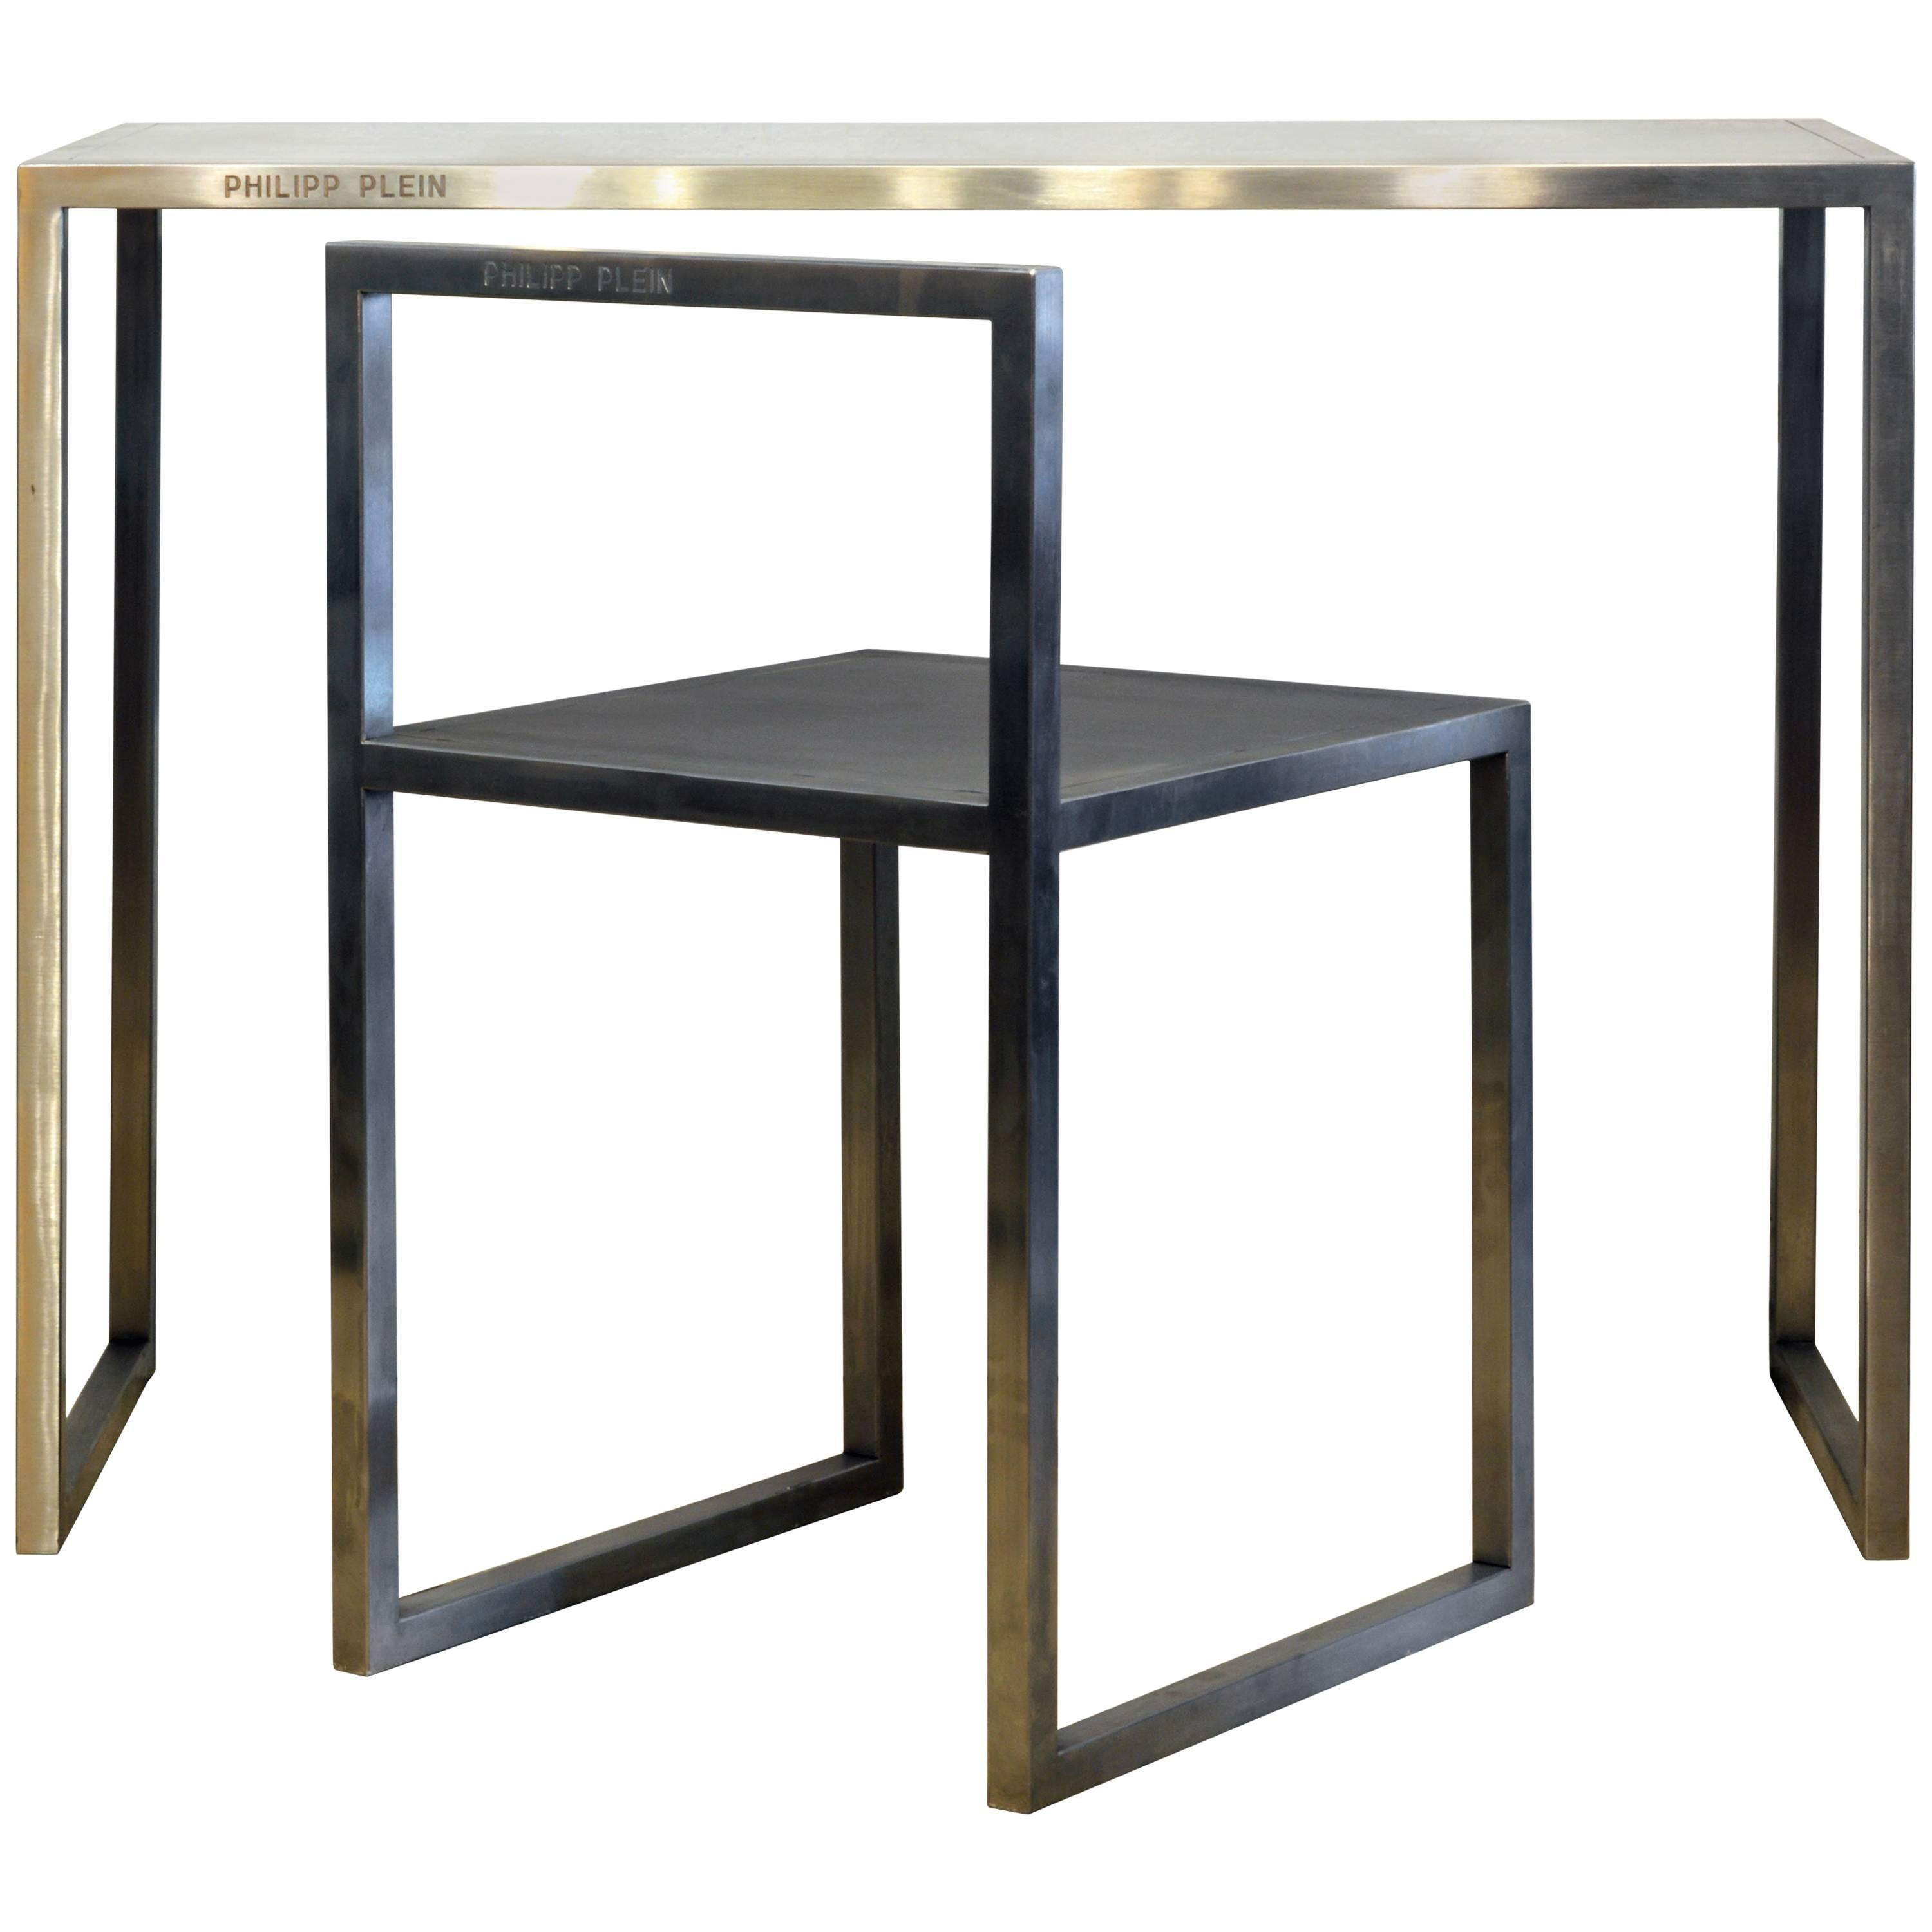 Original Philipp Plein Design Stainless Steel Bauhaus Style Work Table and Chair